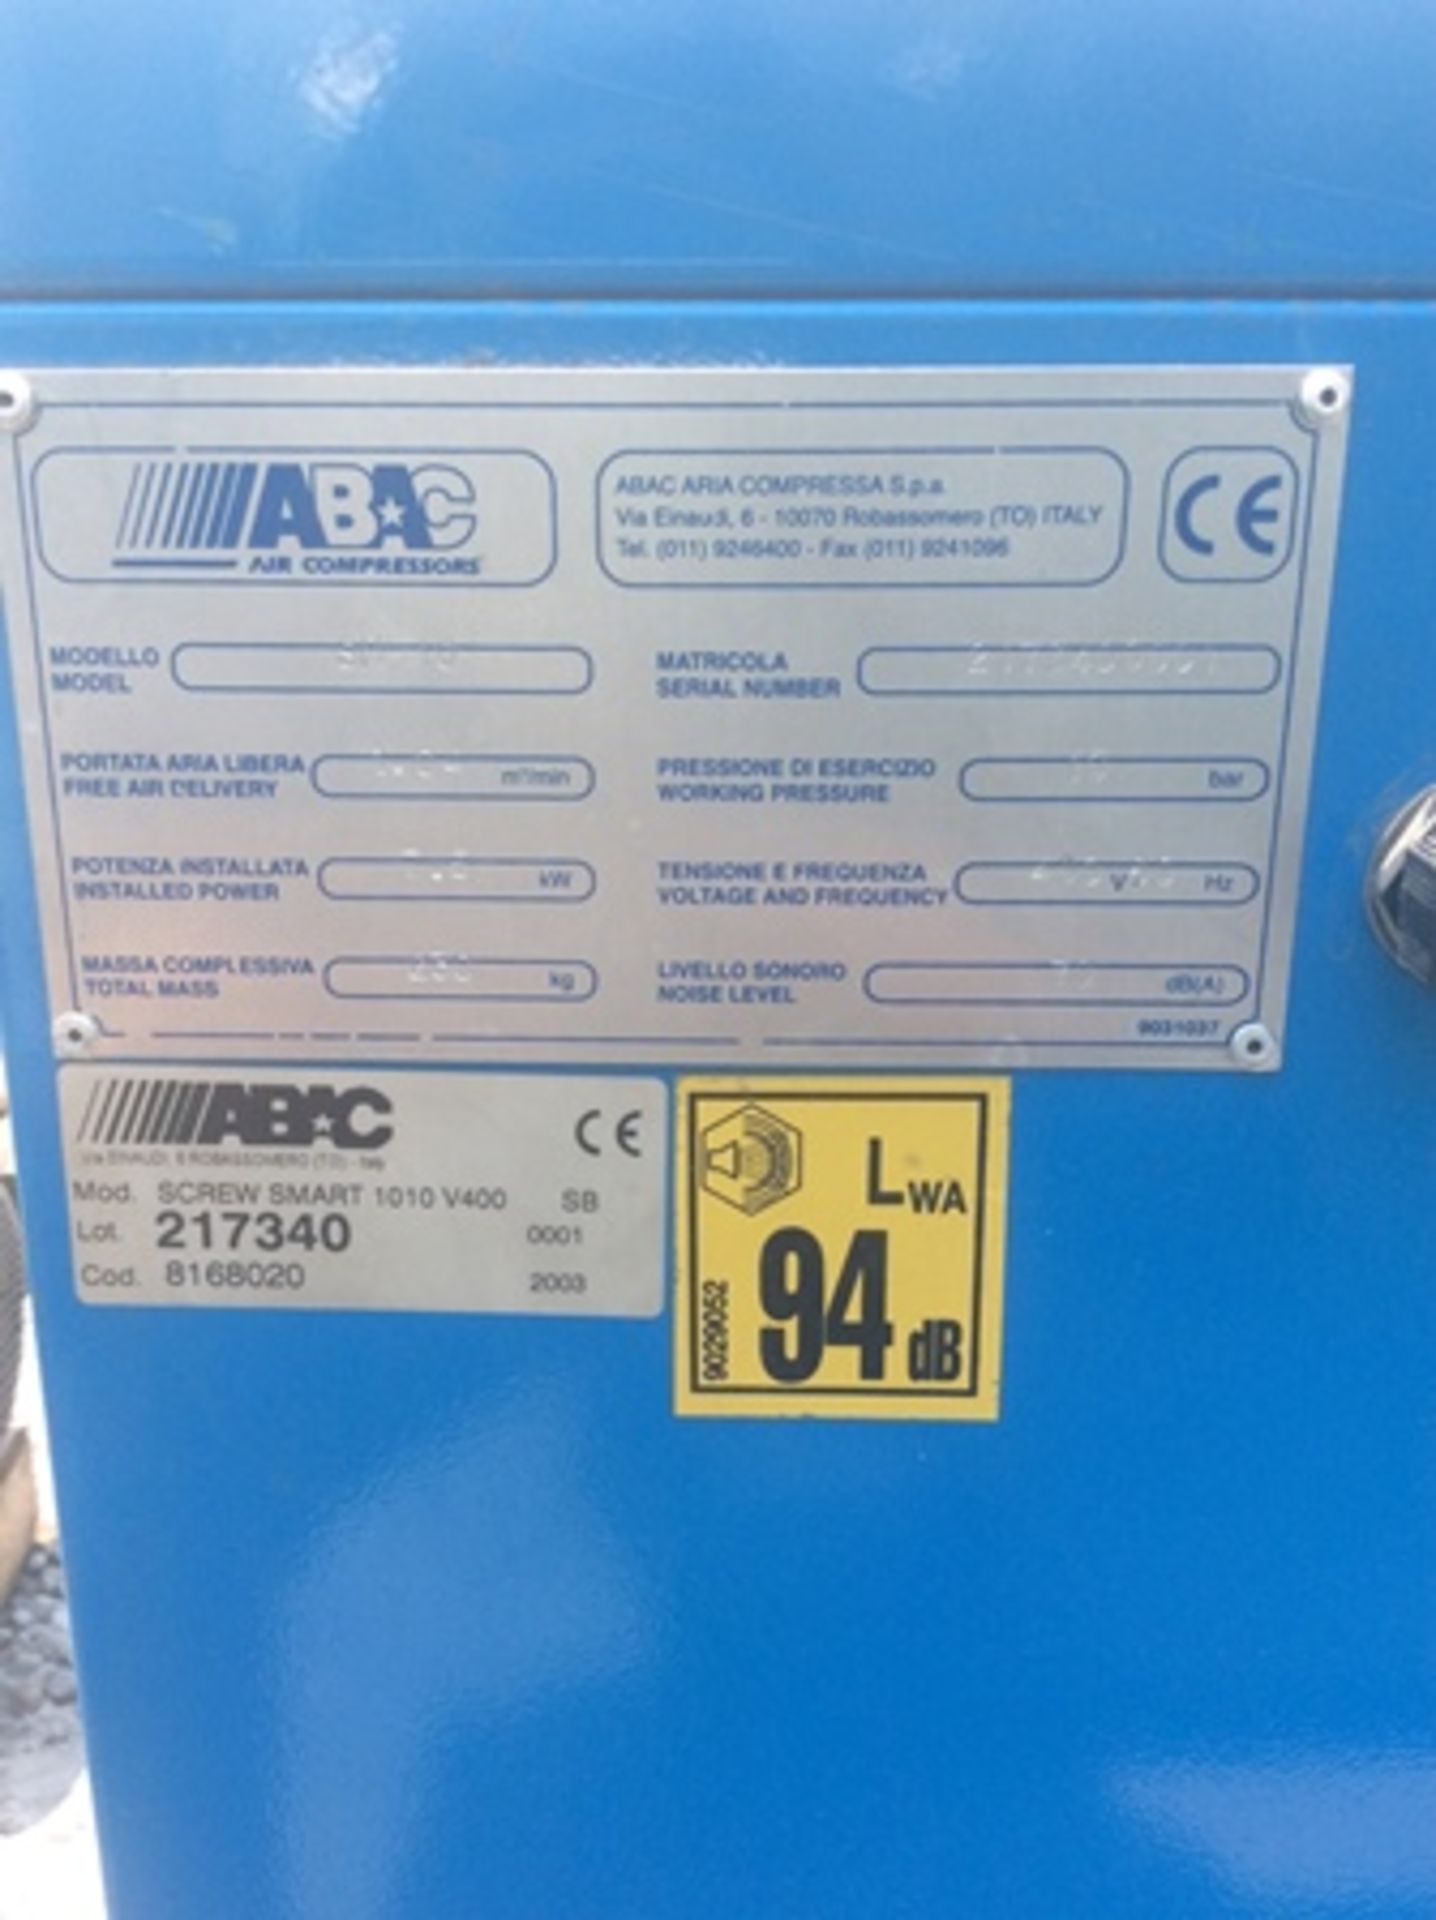 compresor de aire tipo tornillo marca: abac modelo: smart 1010 serie: 2173400001 potencia:7.5 kw (1 - Image 5 of 5